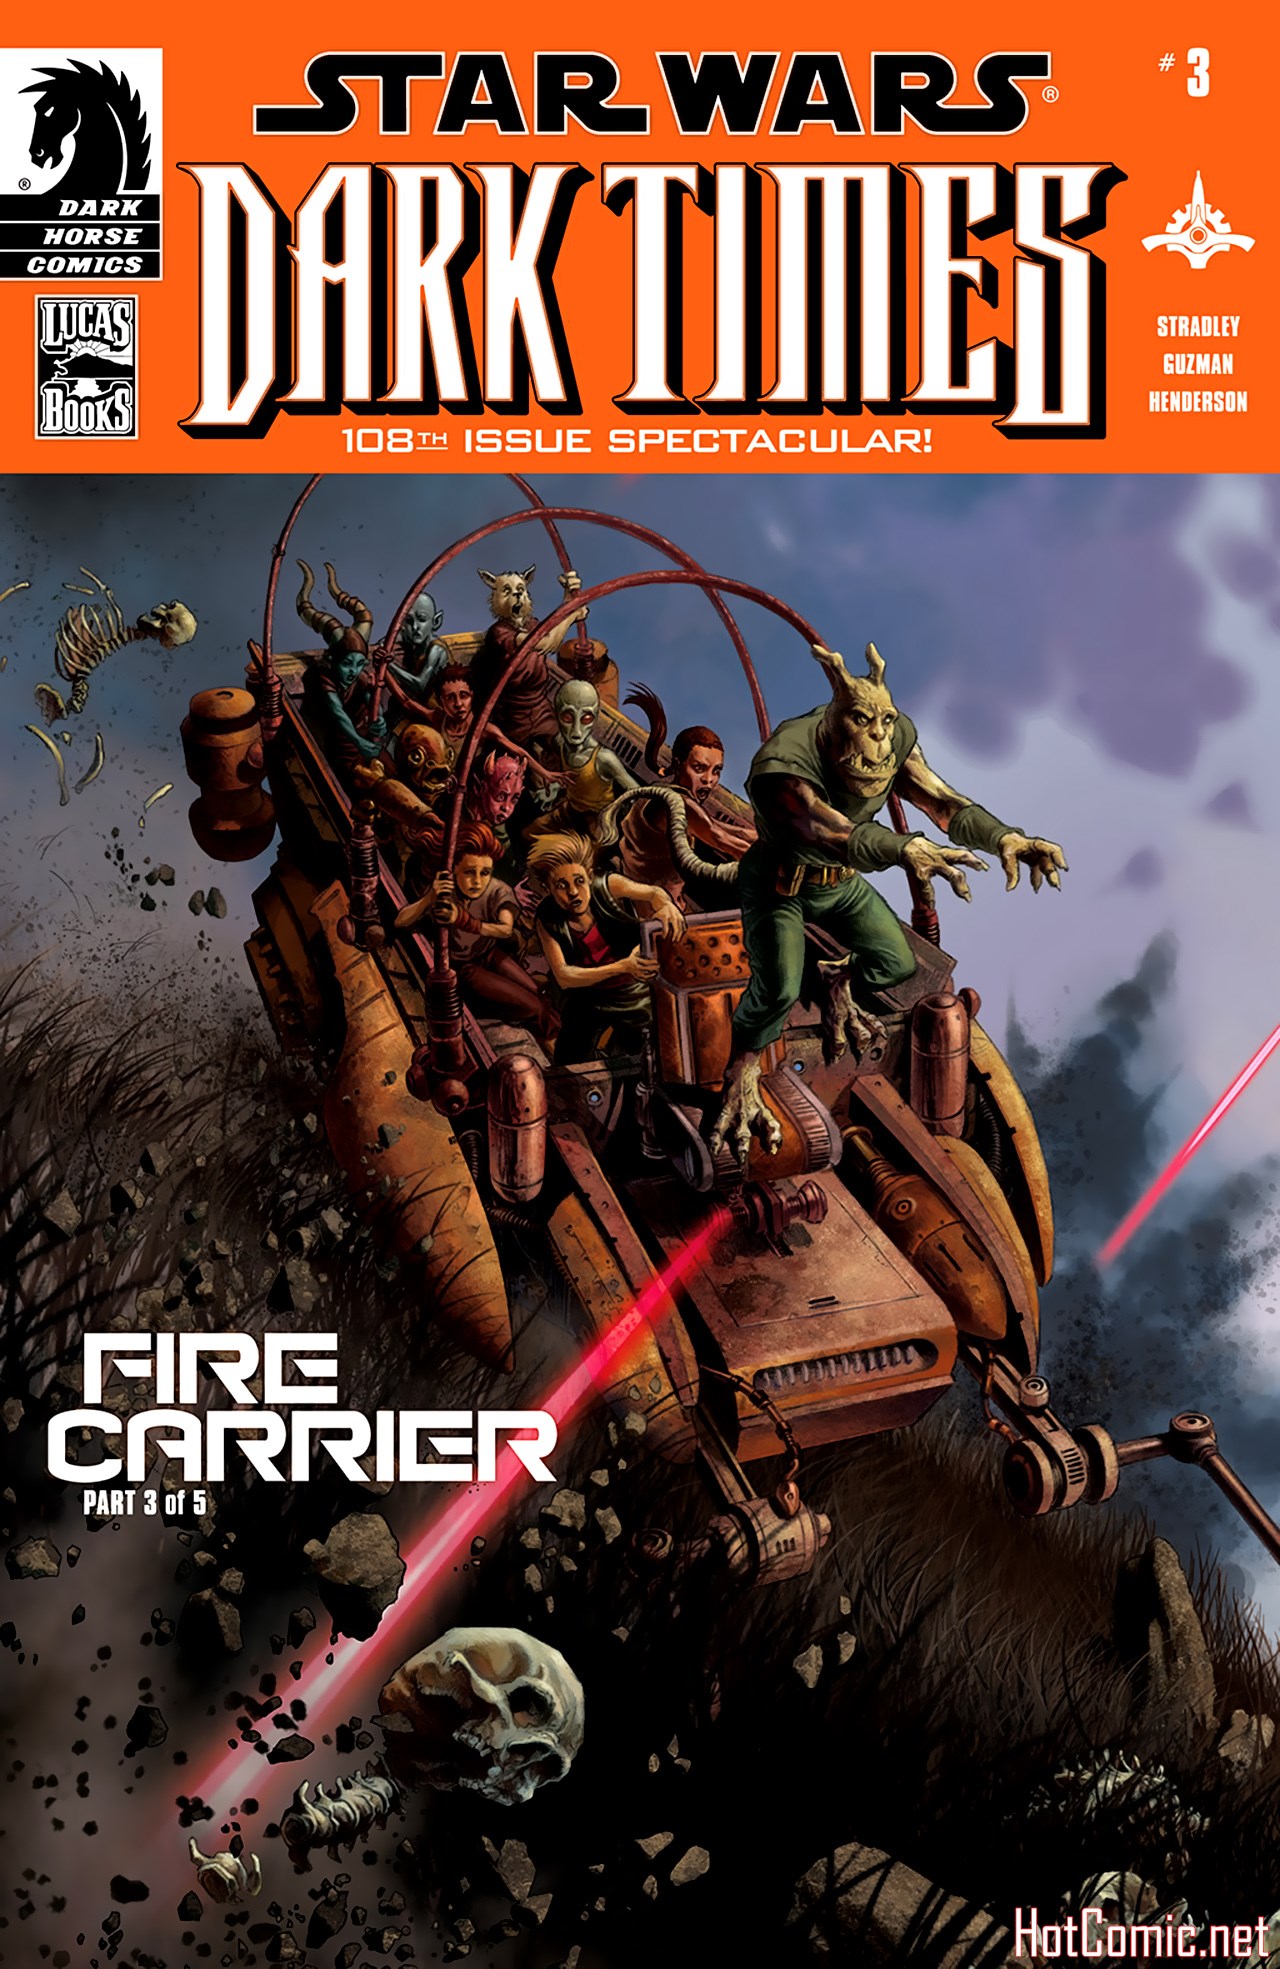 Star Wars: Dark Times - Fire Carrier